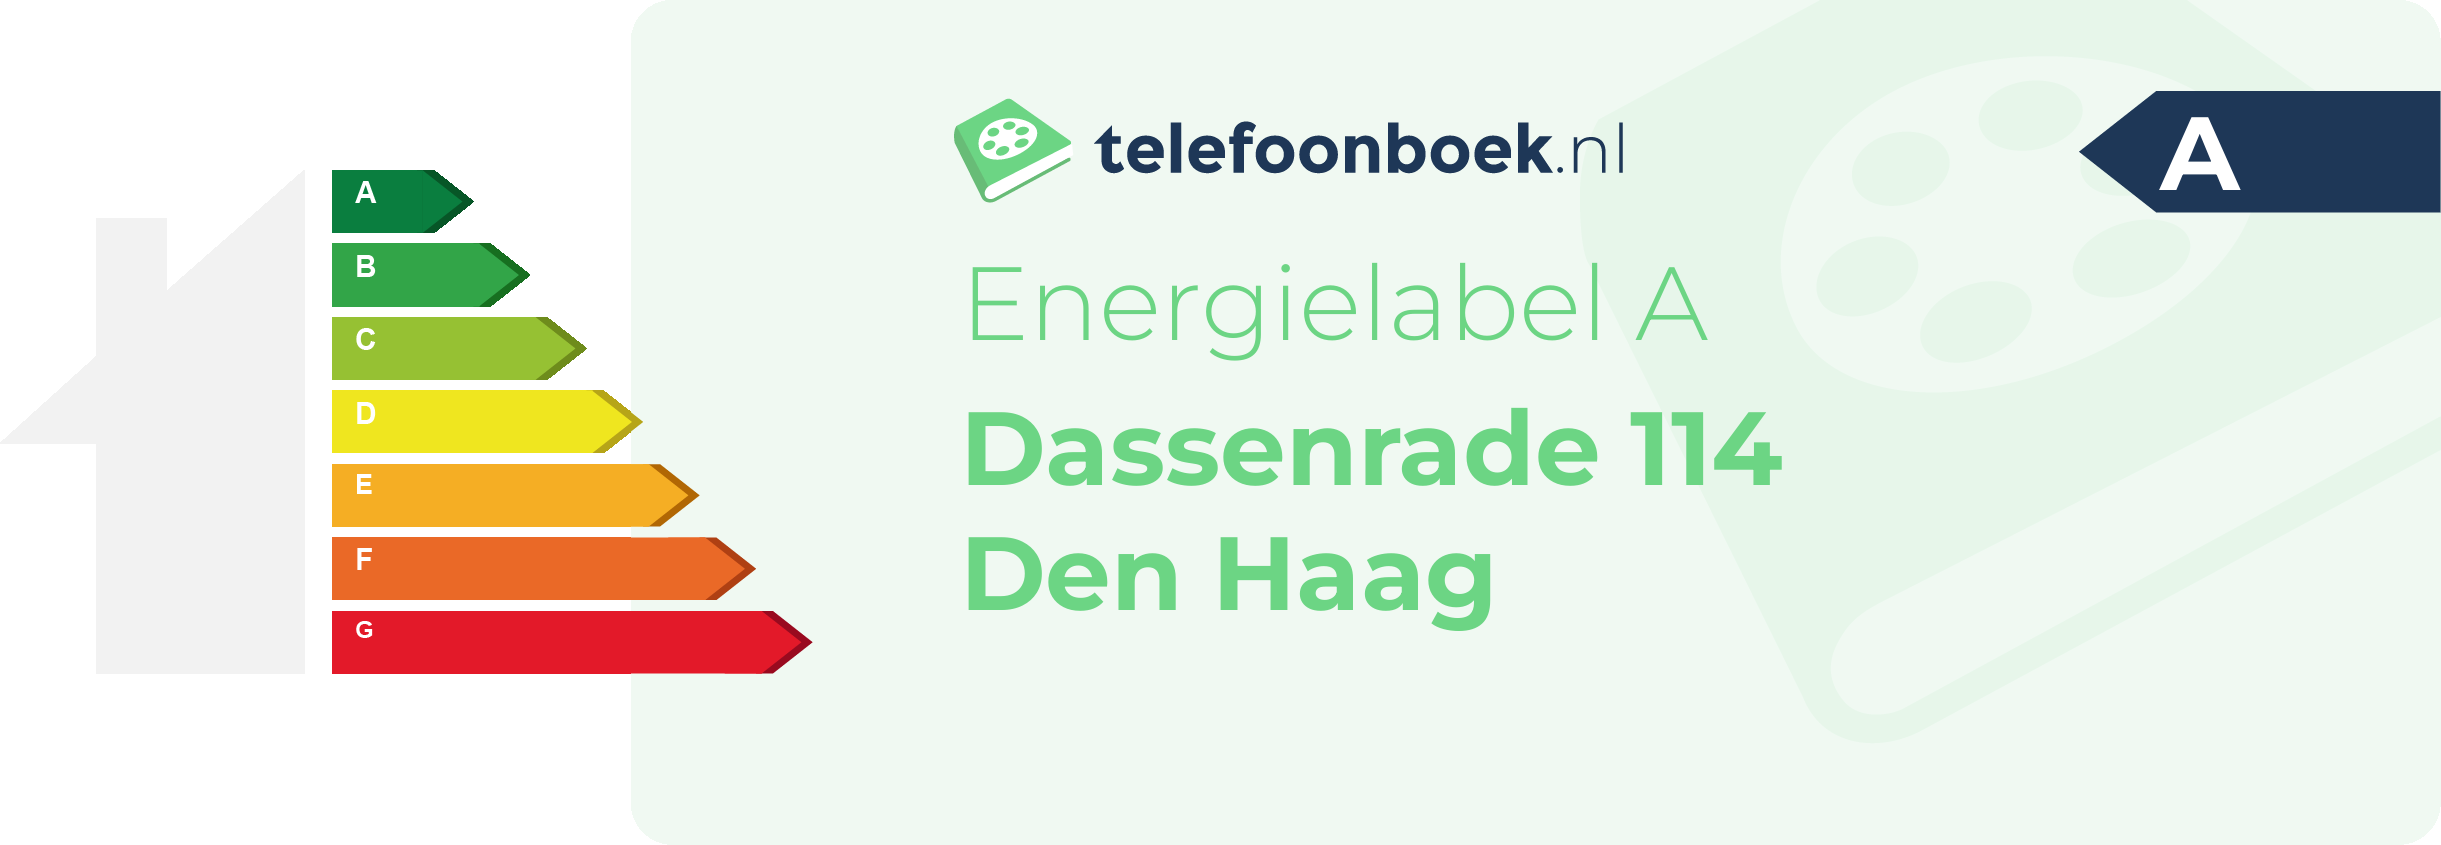 Energielabel Dassenrade 114 Den Haag